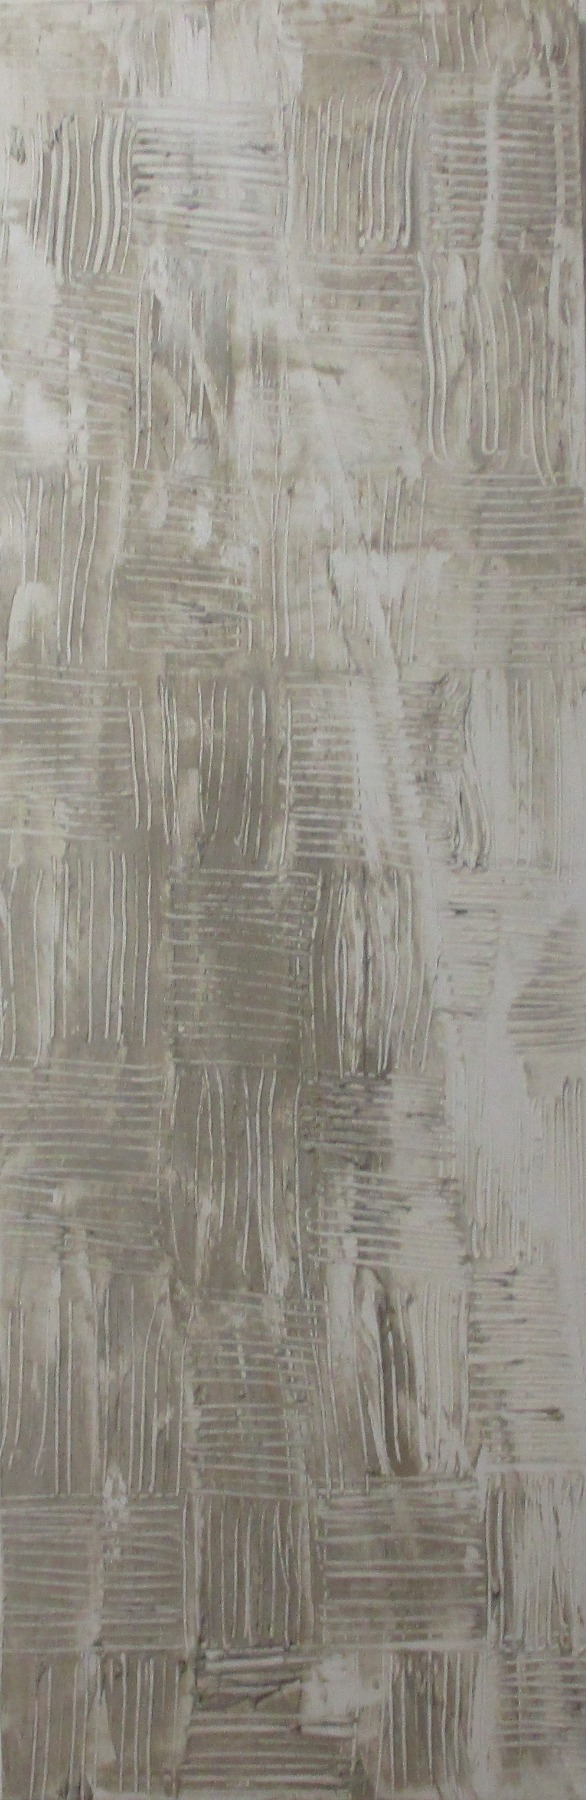 monochromes Strukturbild Relief Texture art weiss grau Sandbild 40x50x4cm 2